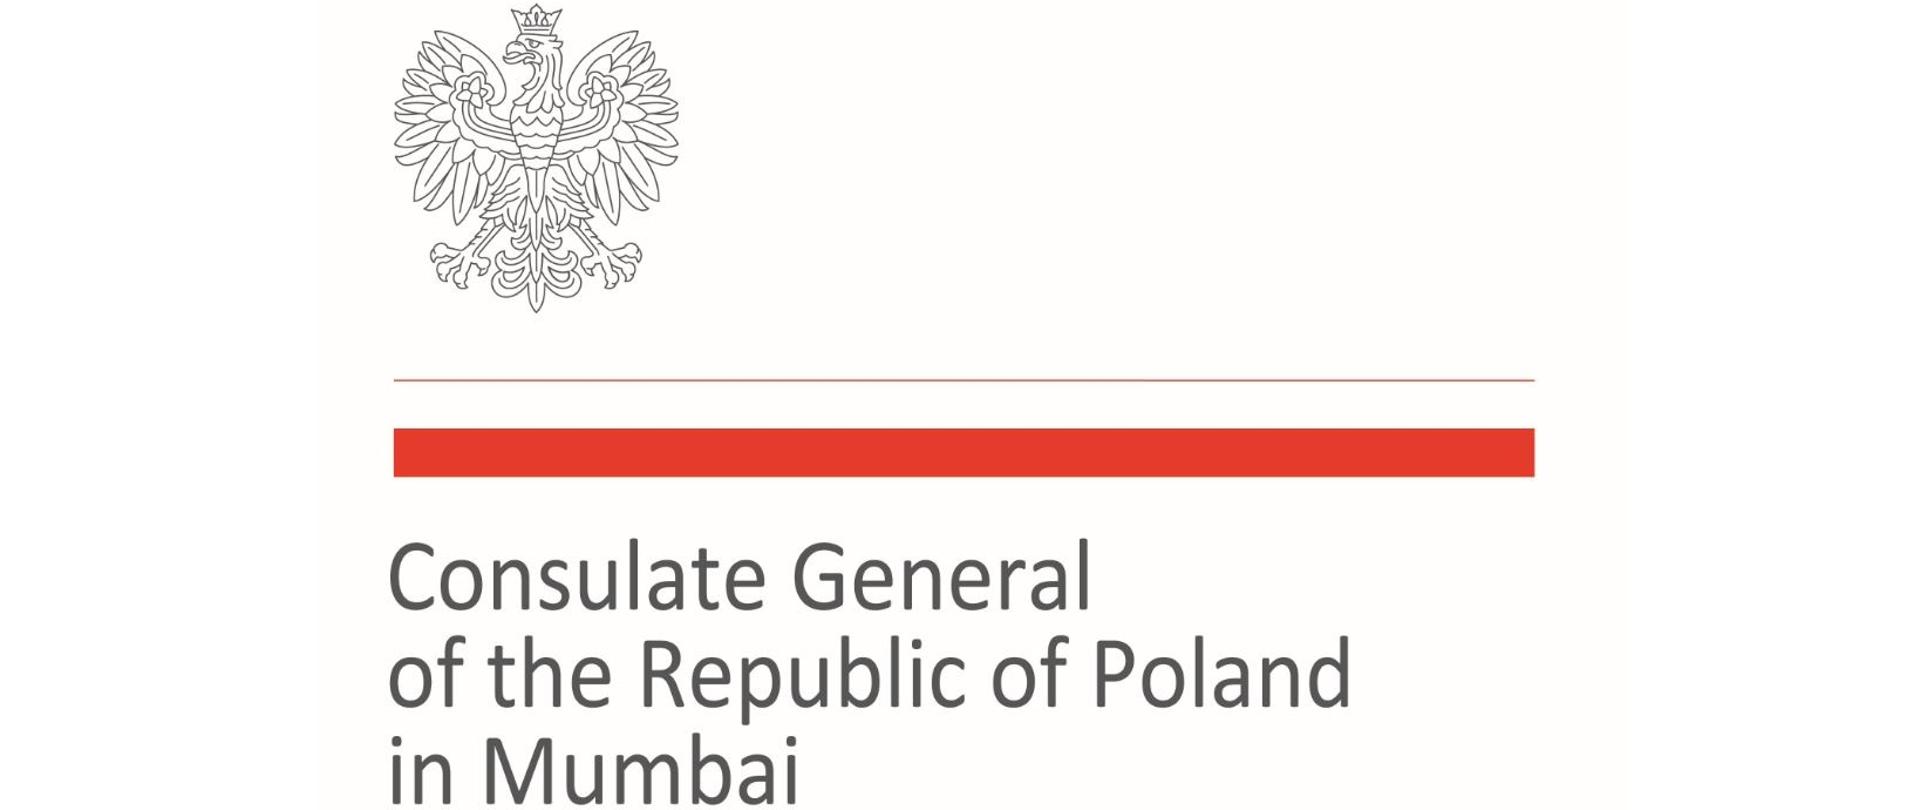 Konsulat Generalny w Mumbaju